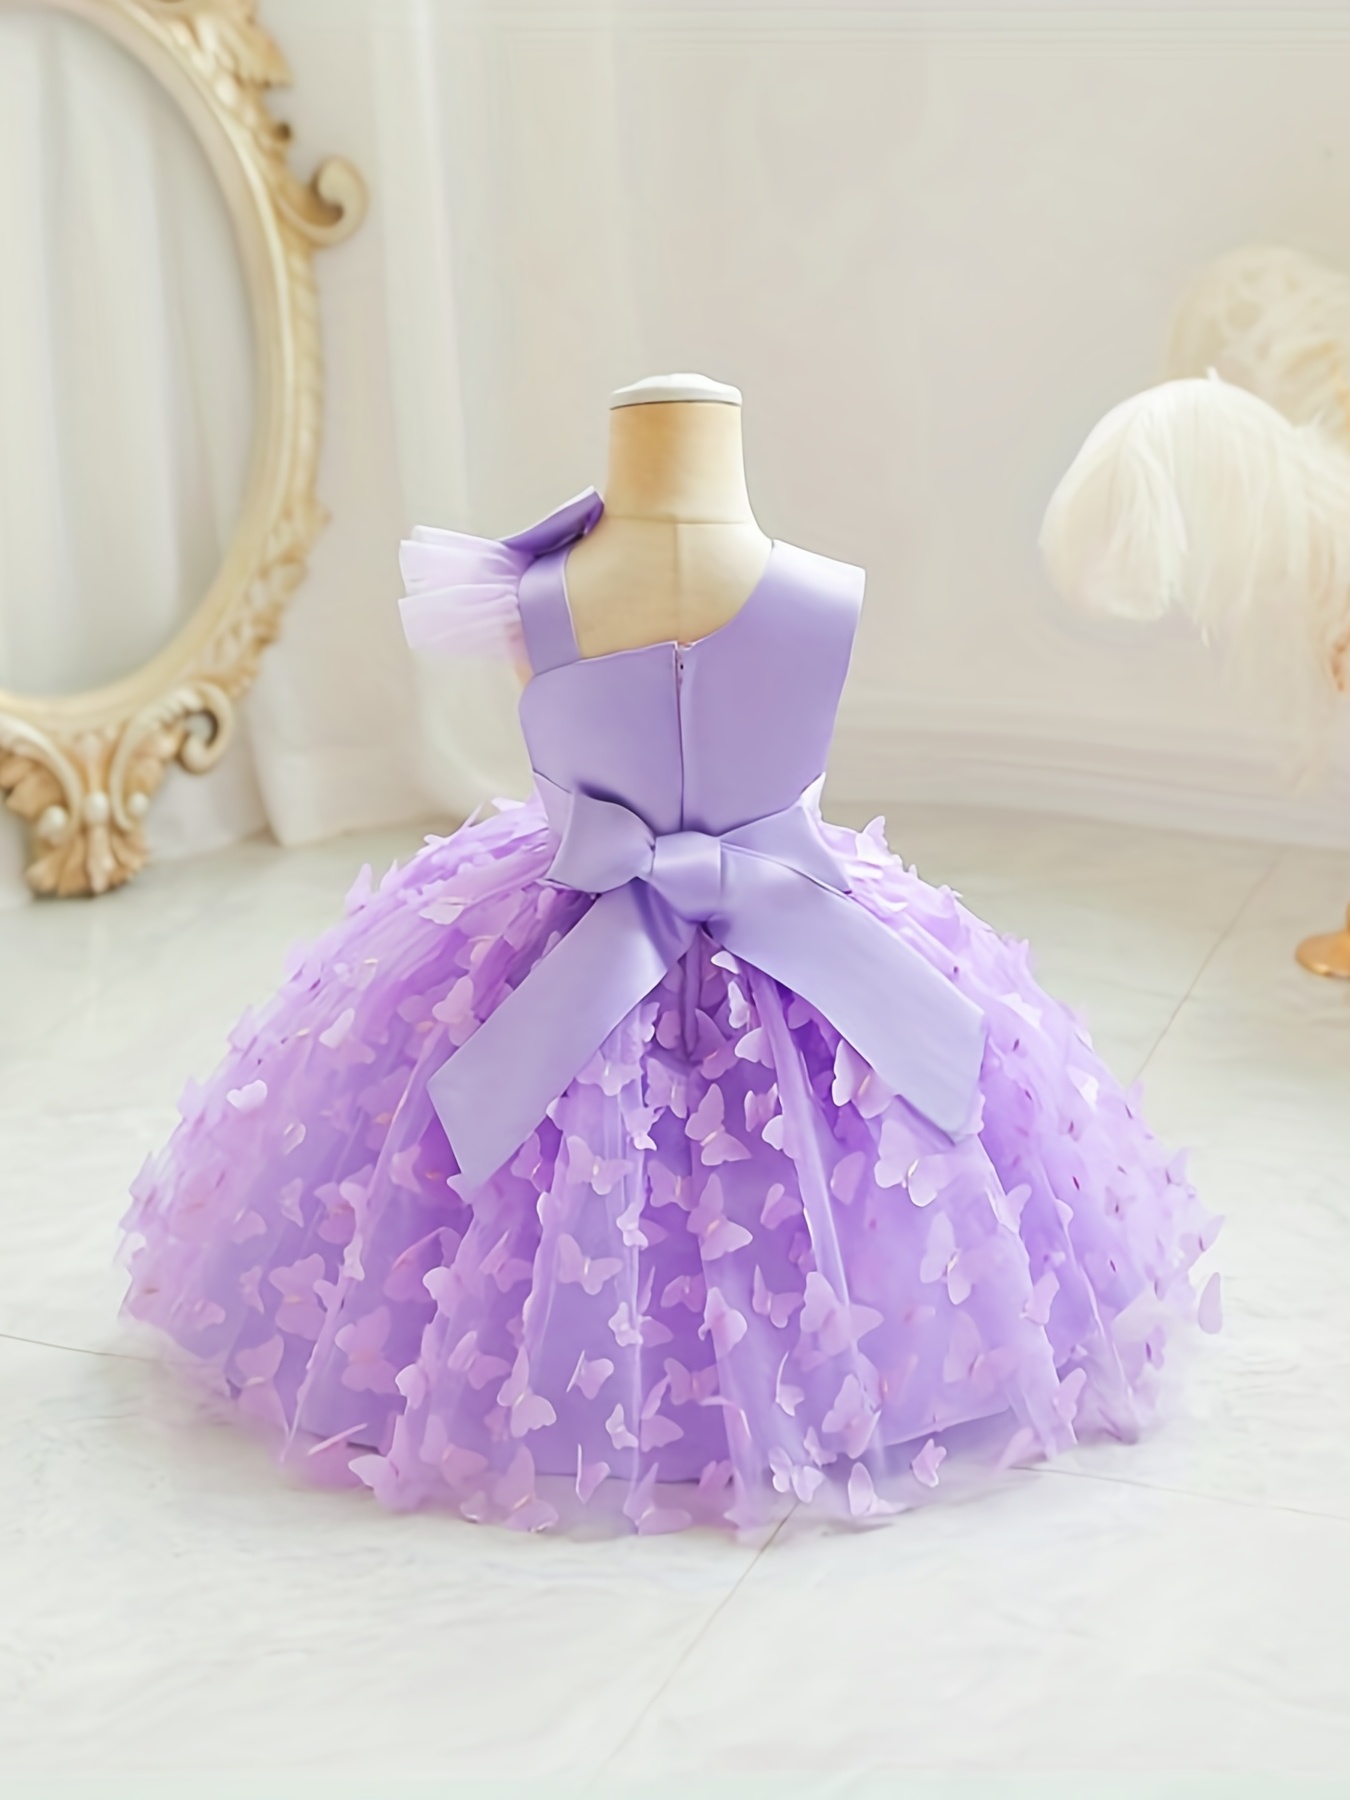 MQATZ Elegant Girl's Princess Sleeveless Dress Kids Wedding Clothes  Bridesmaid Formal Long Birthday Party Gown LP-391